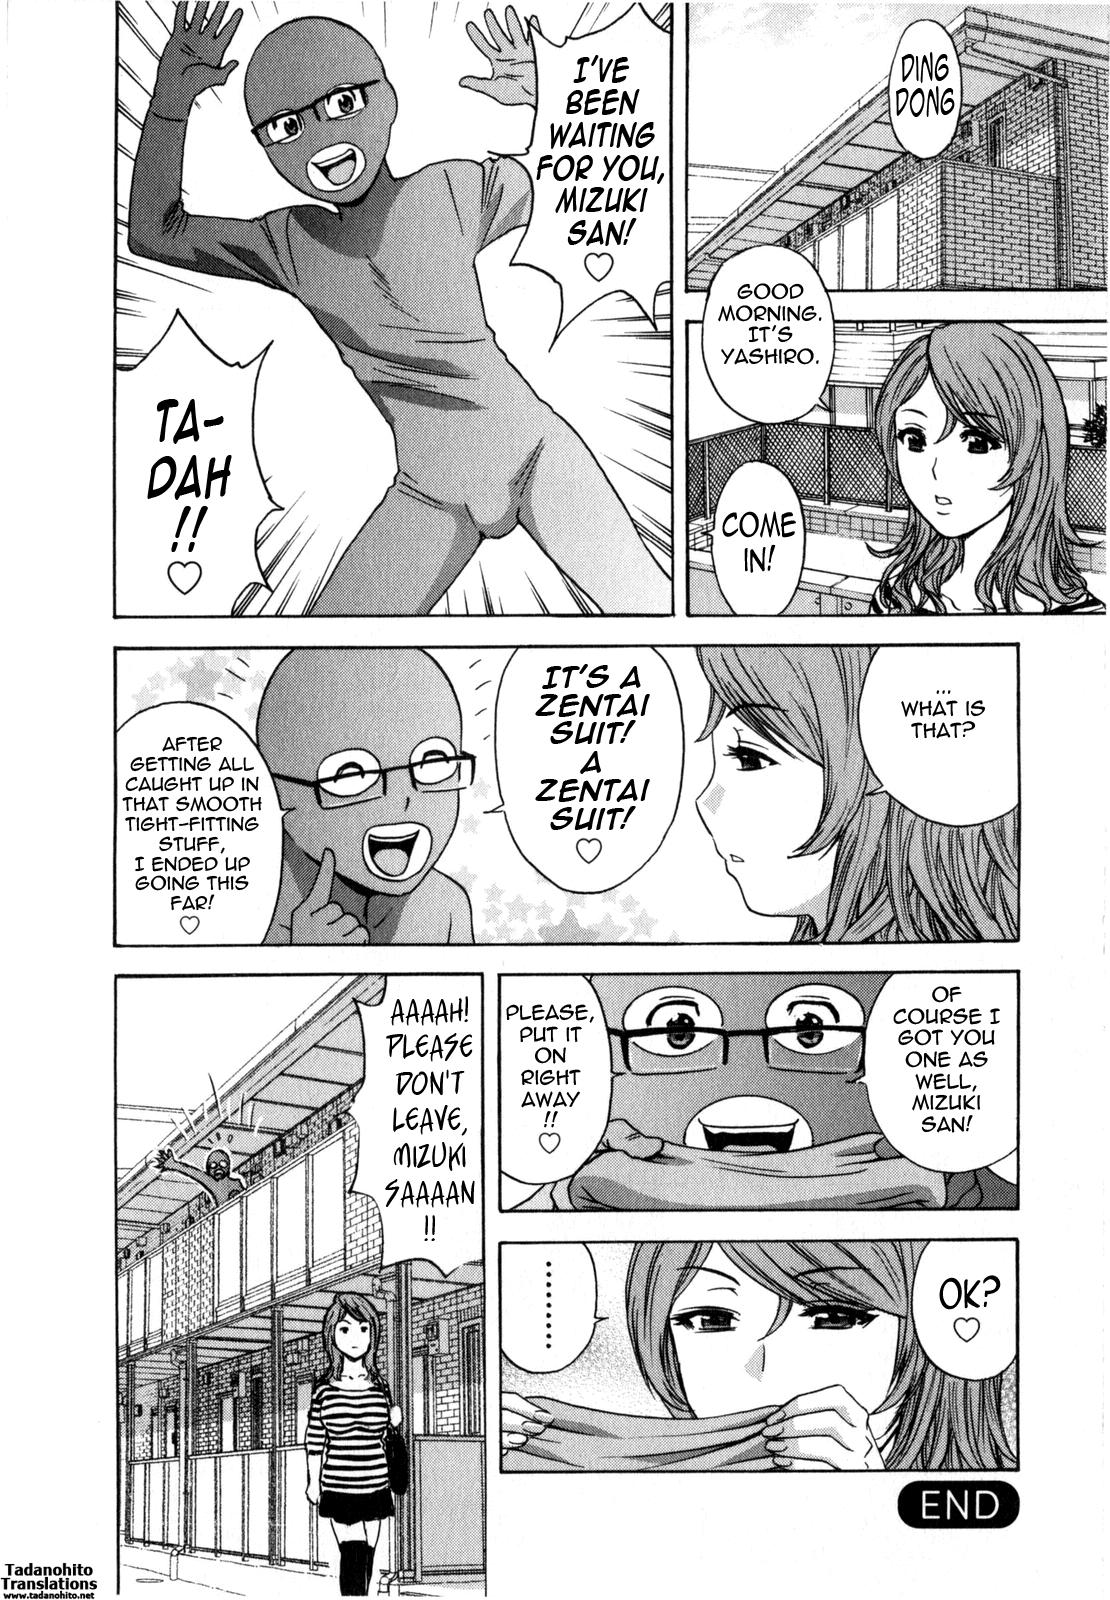 [Hidemaru] Life with Married Women Just Like a Manga 2 - Ch. 1-7 [English] {Tadanohito} 103